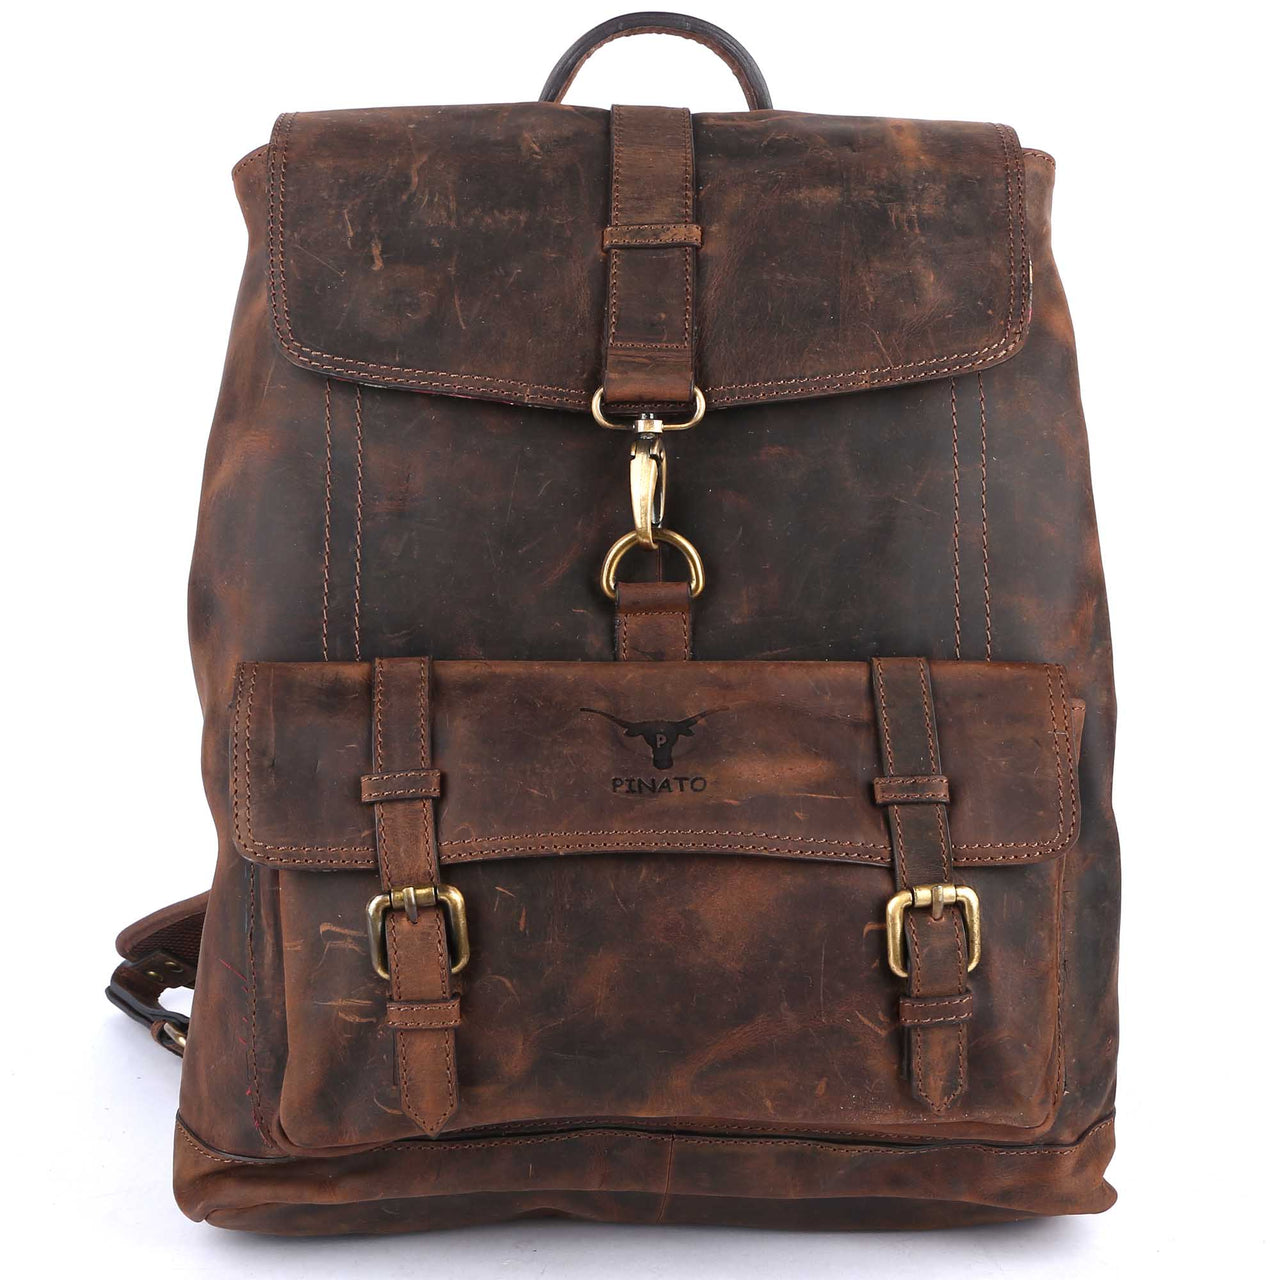 Pinato Genuine Leather Cognac Backpack for Men & Women (PL-7717)